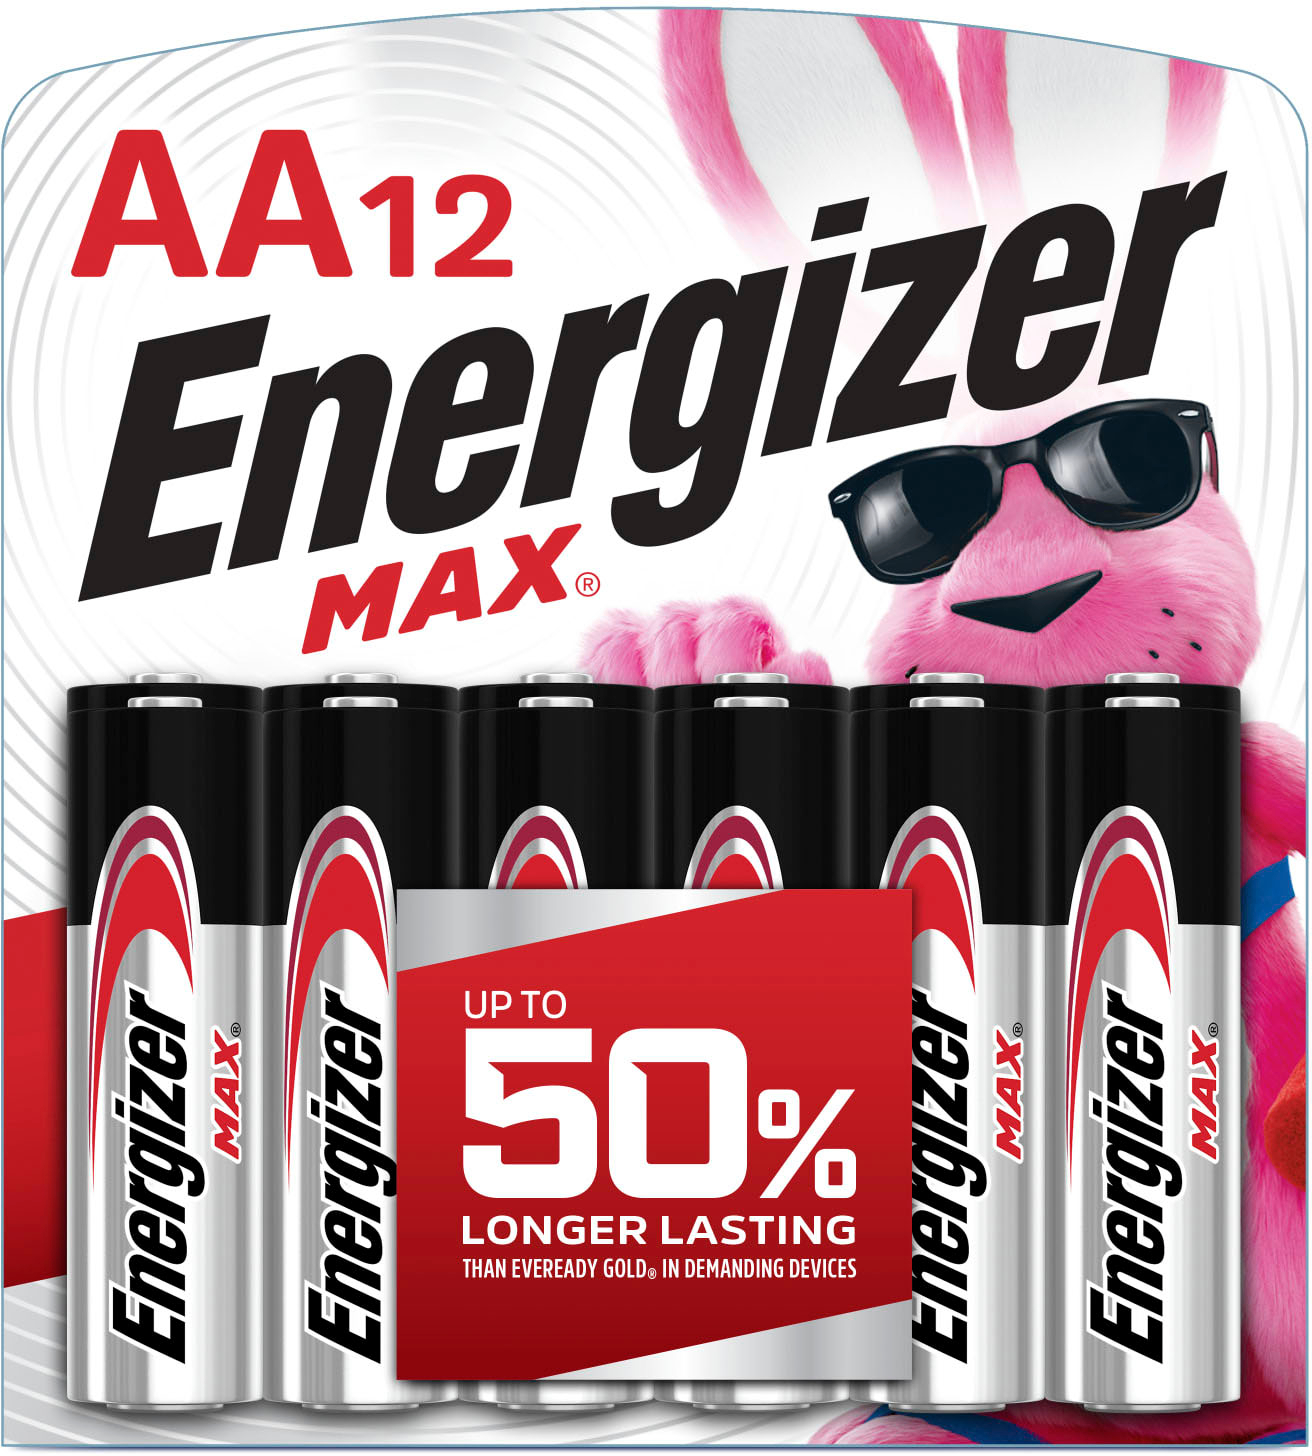 Energizer AA Batteries, Alkaline Power, 24 Pack, Double A Battery